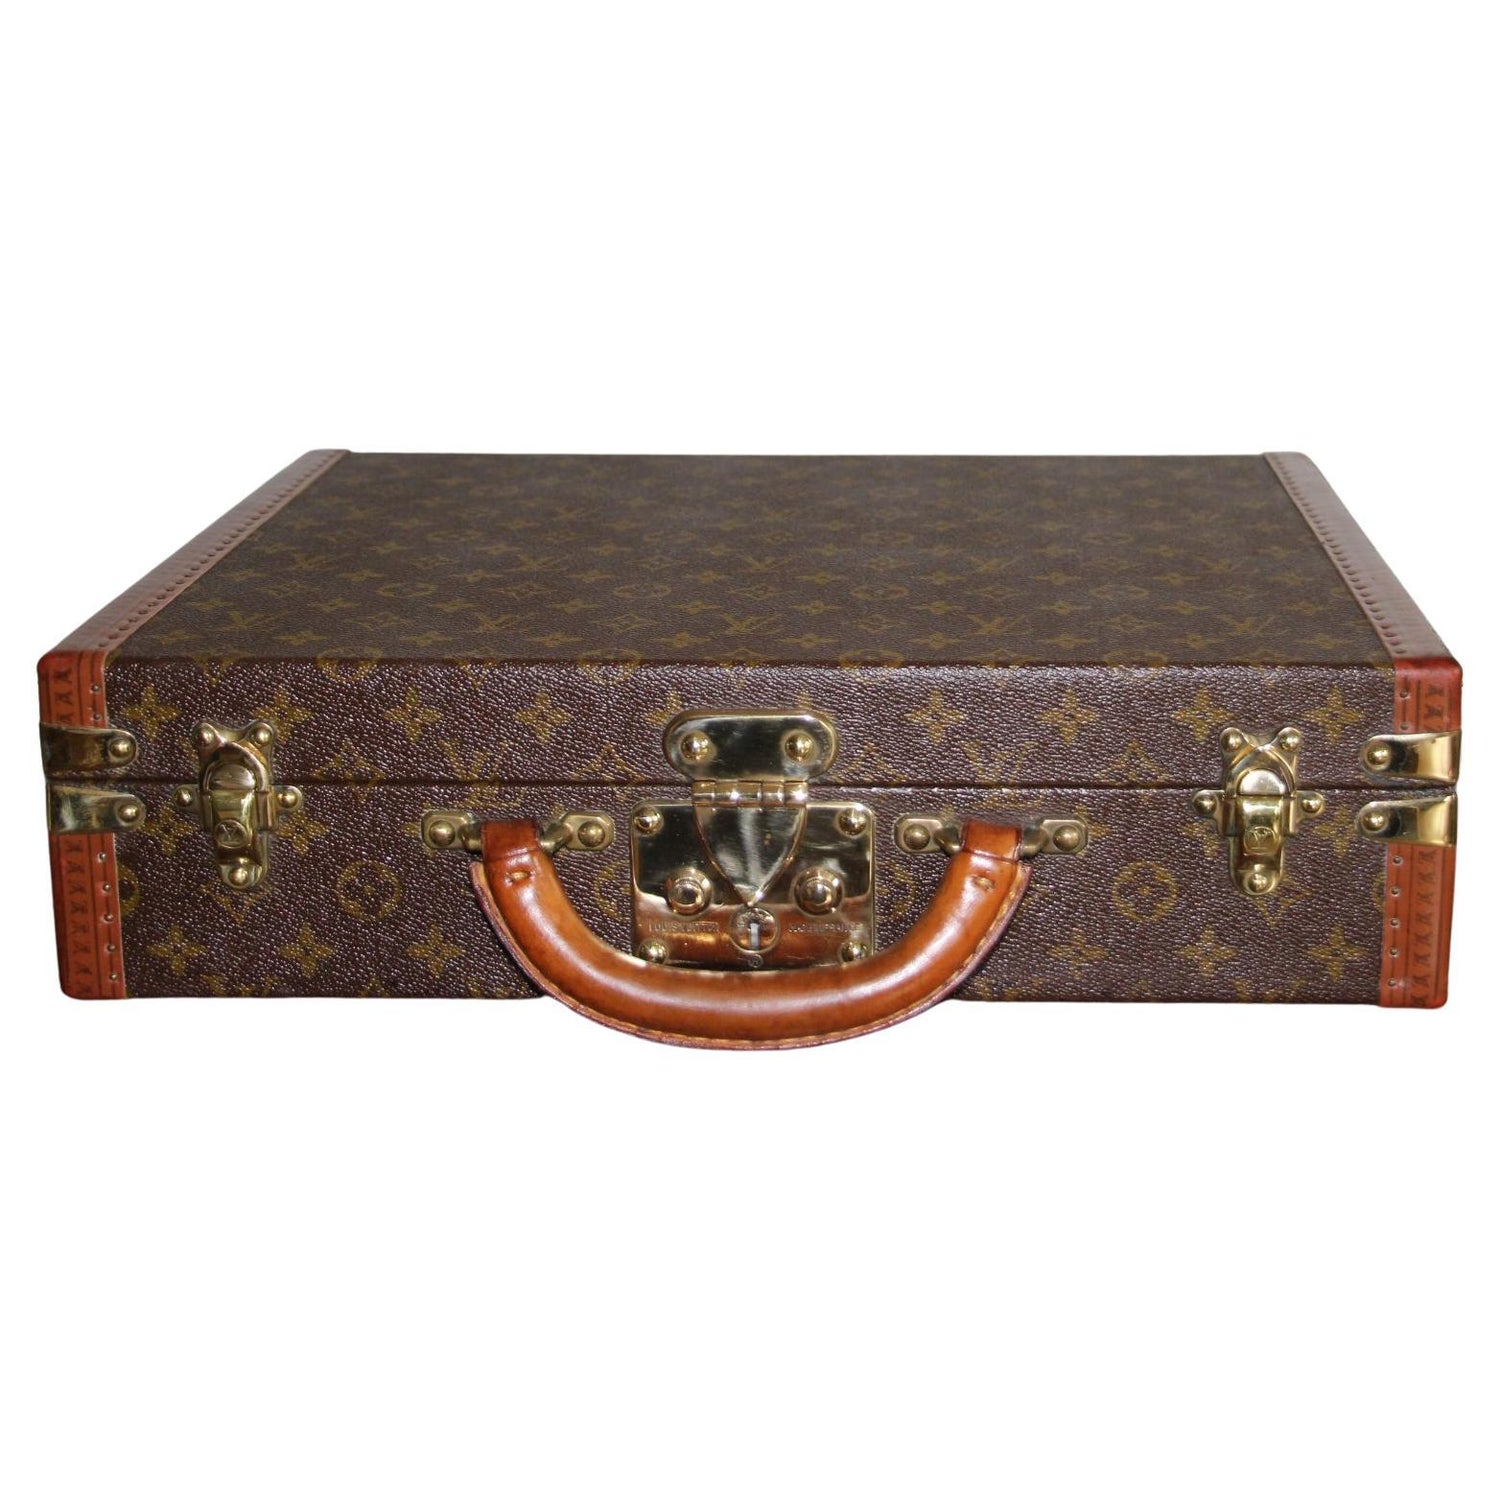 Louis Vuitton flower trunk - modern version - Pinth Vintage Luggage